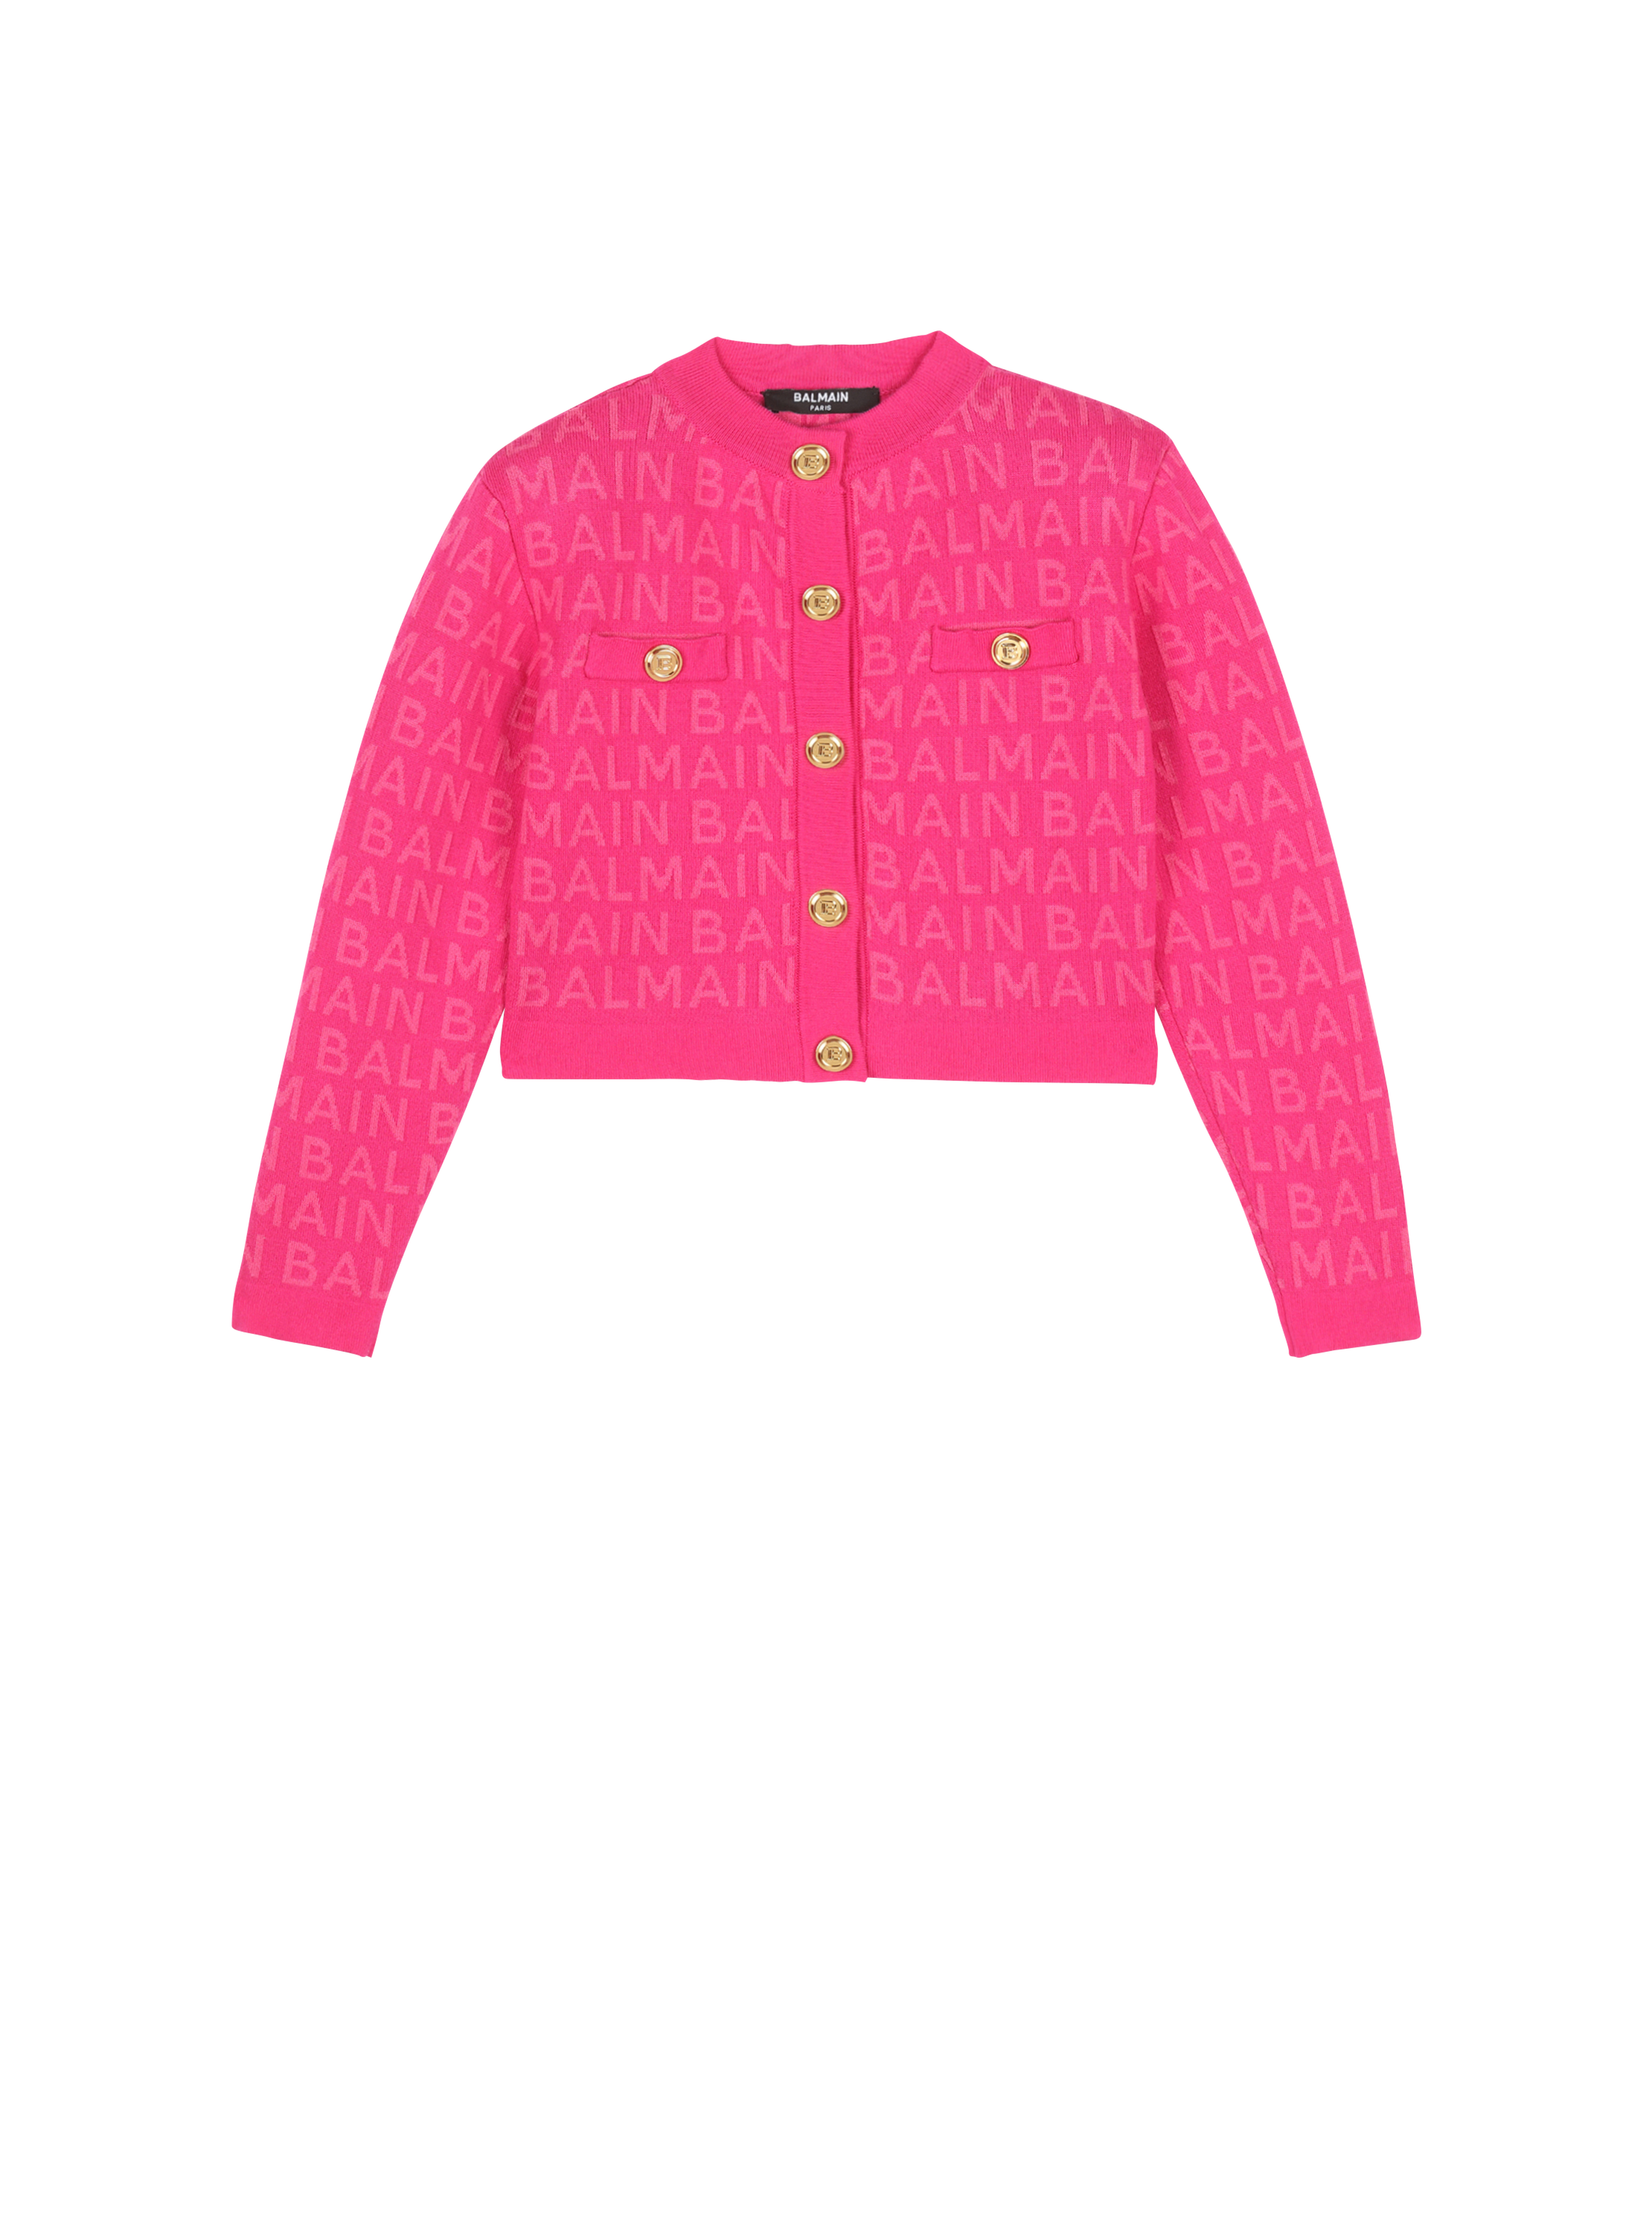 Balmain巴尔曼标志棉质外套, pink